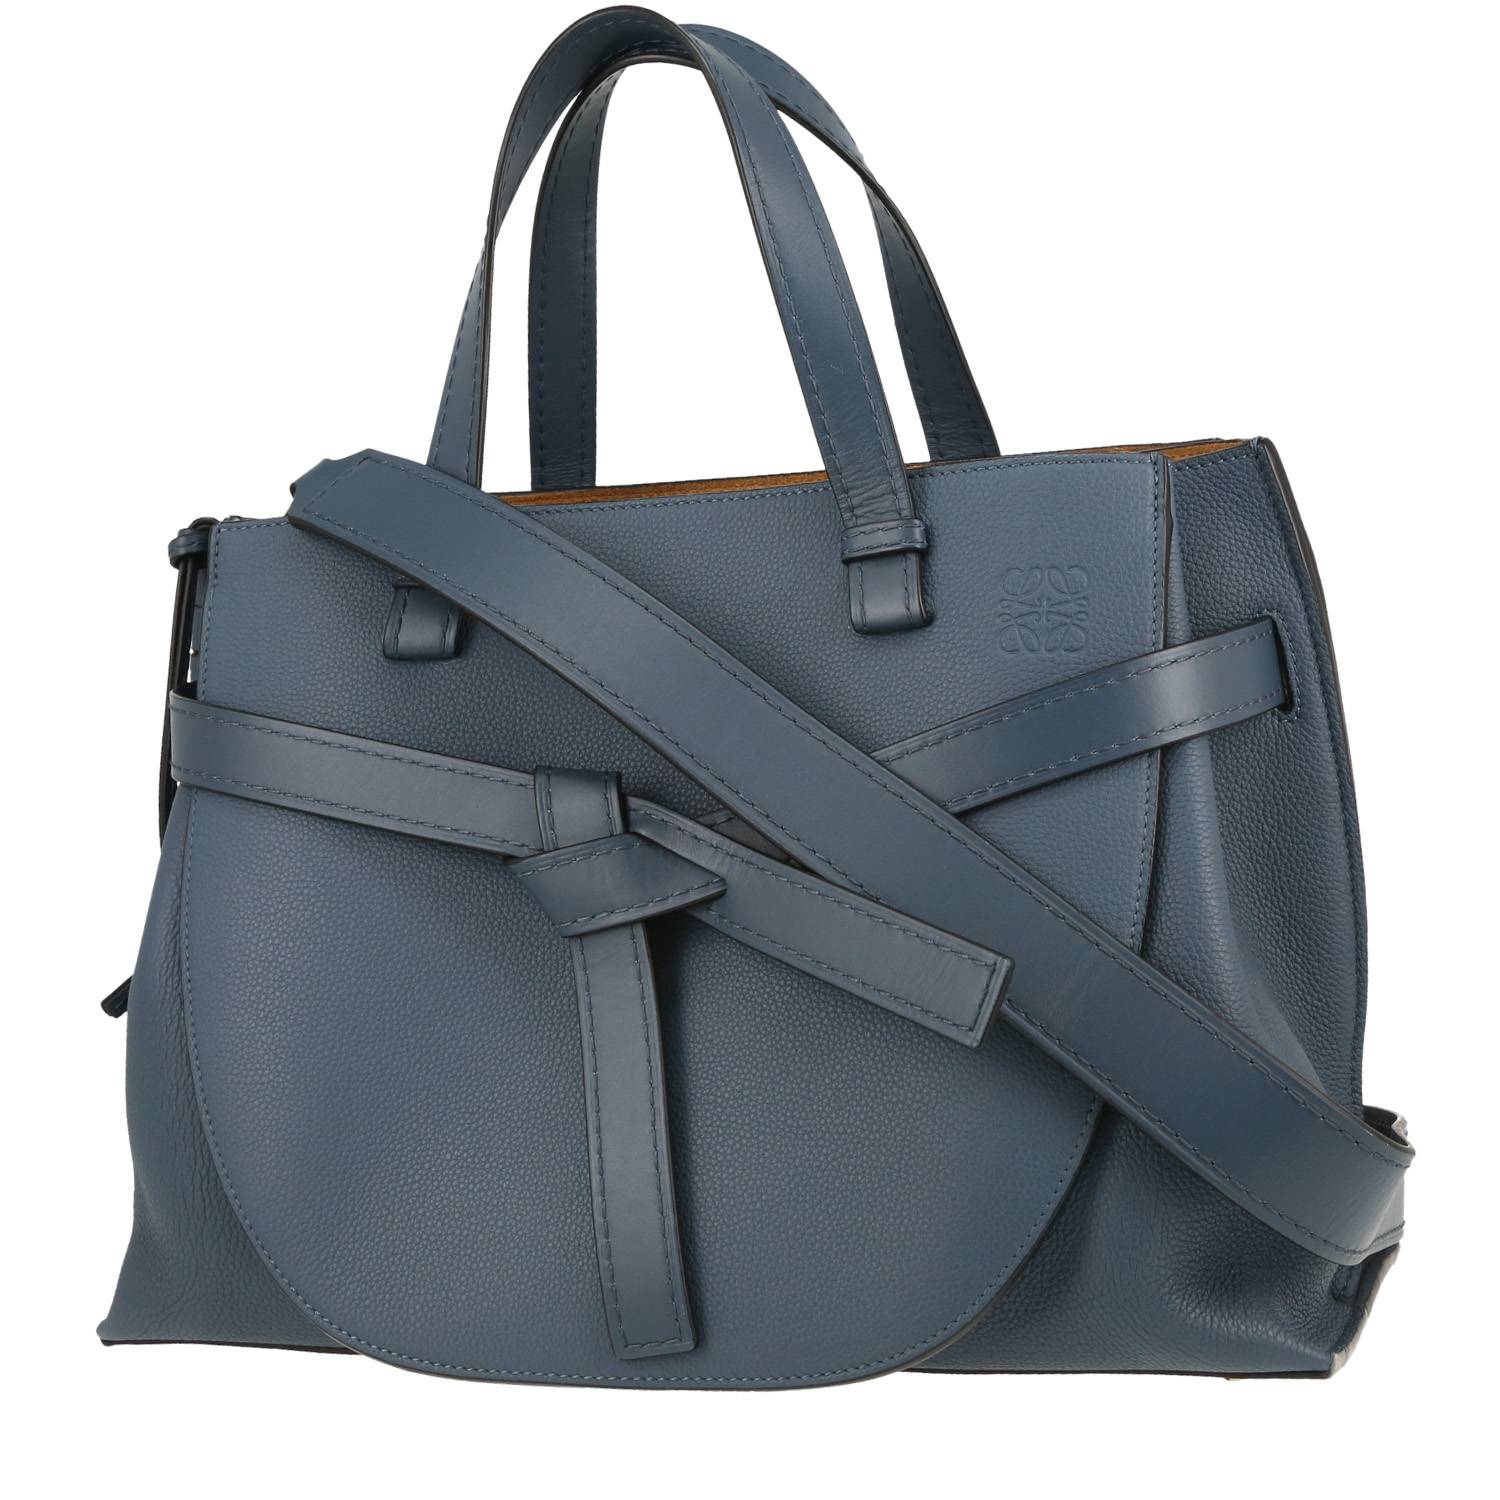 Gate Handbag In Blue Leather